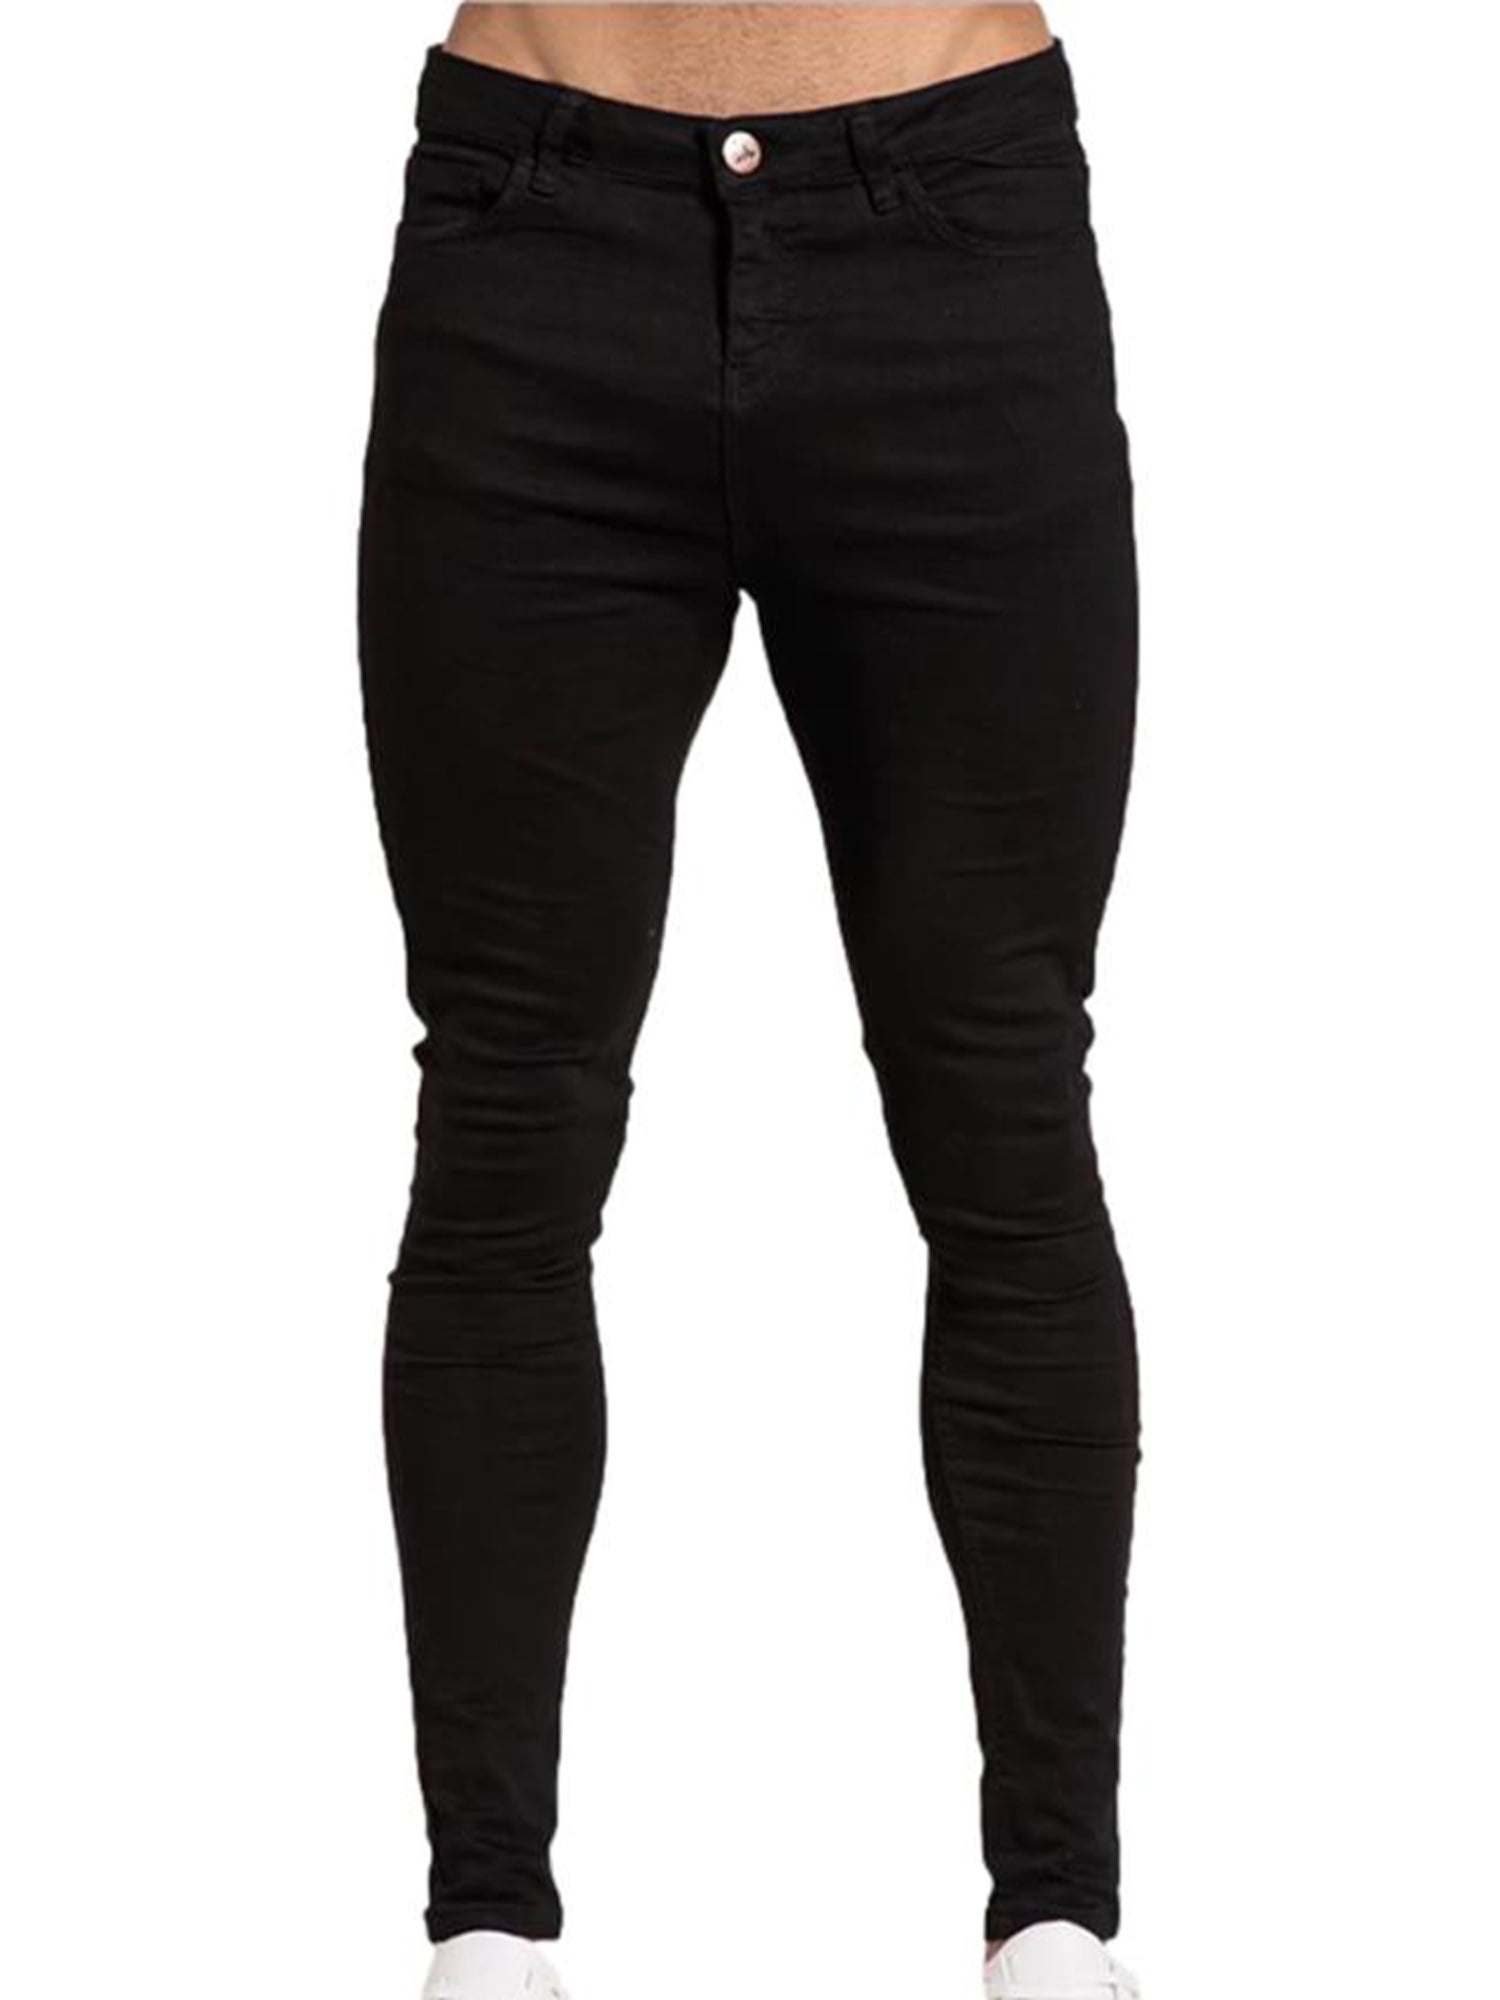 KAMAMEN Hipster Skinny Denim Pants Stretch Trousers Black L Walmart.com